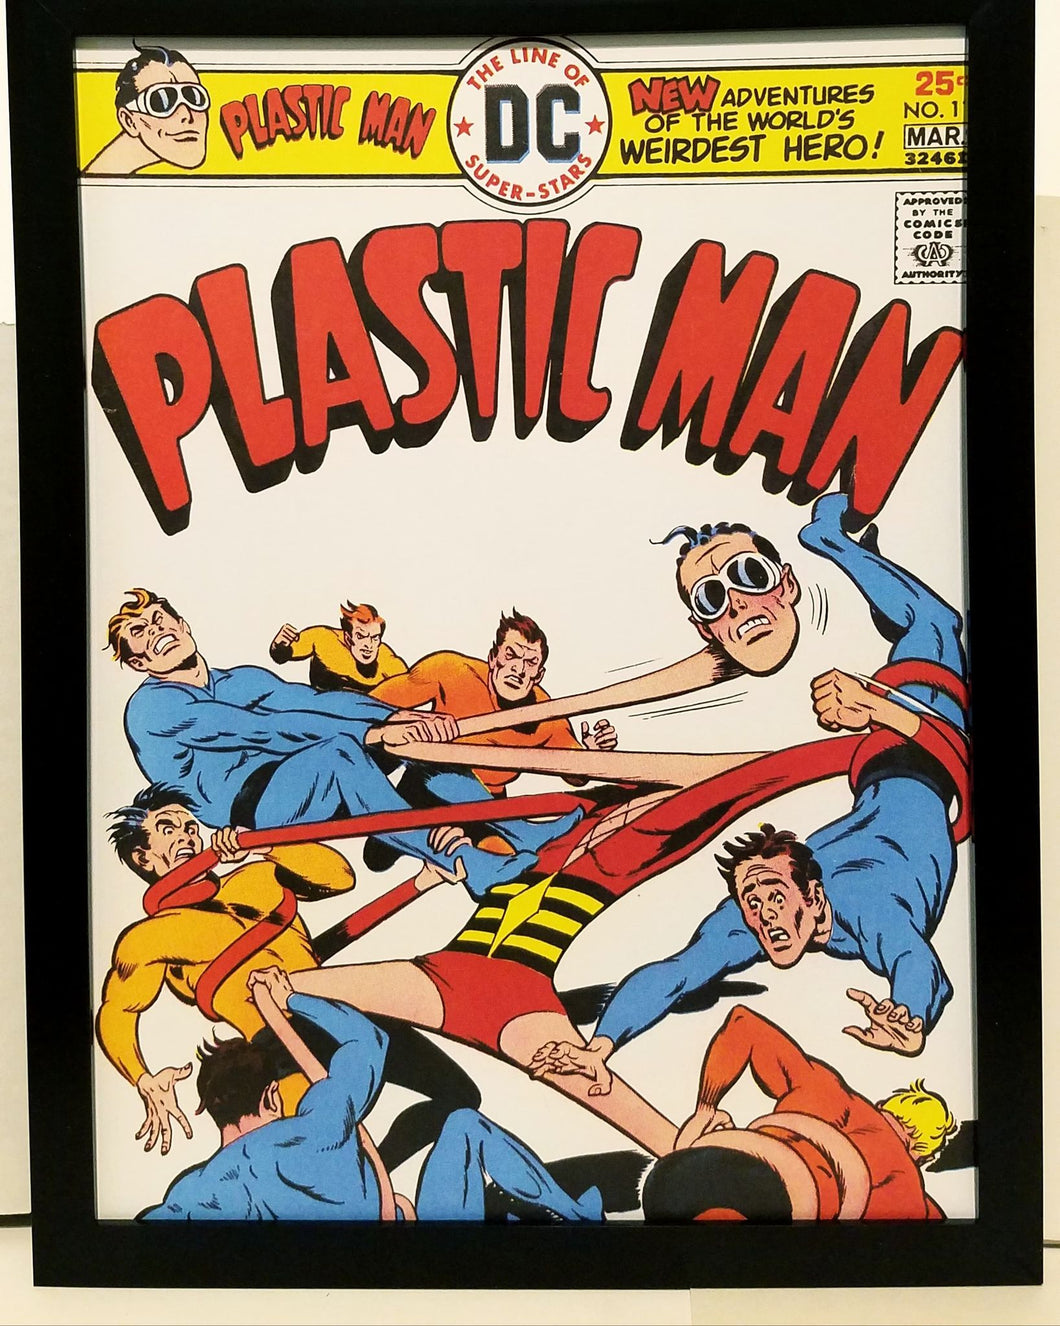 Plastic Man #11 by Ramona Fradon 9x12 FRAMED Vintage DC Comics Art Print Poster